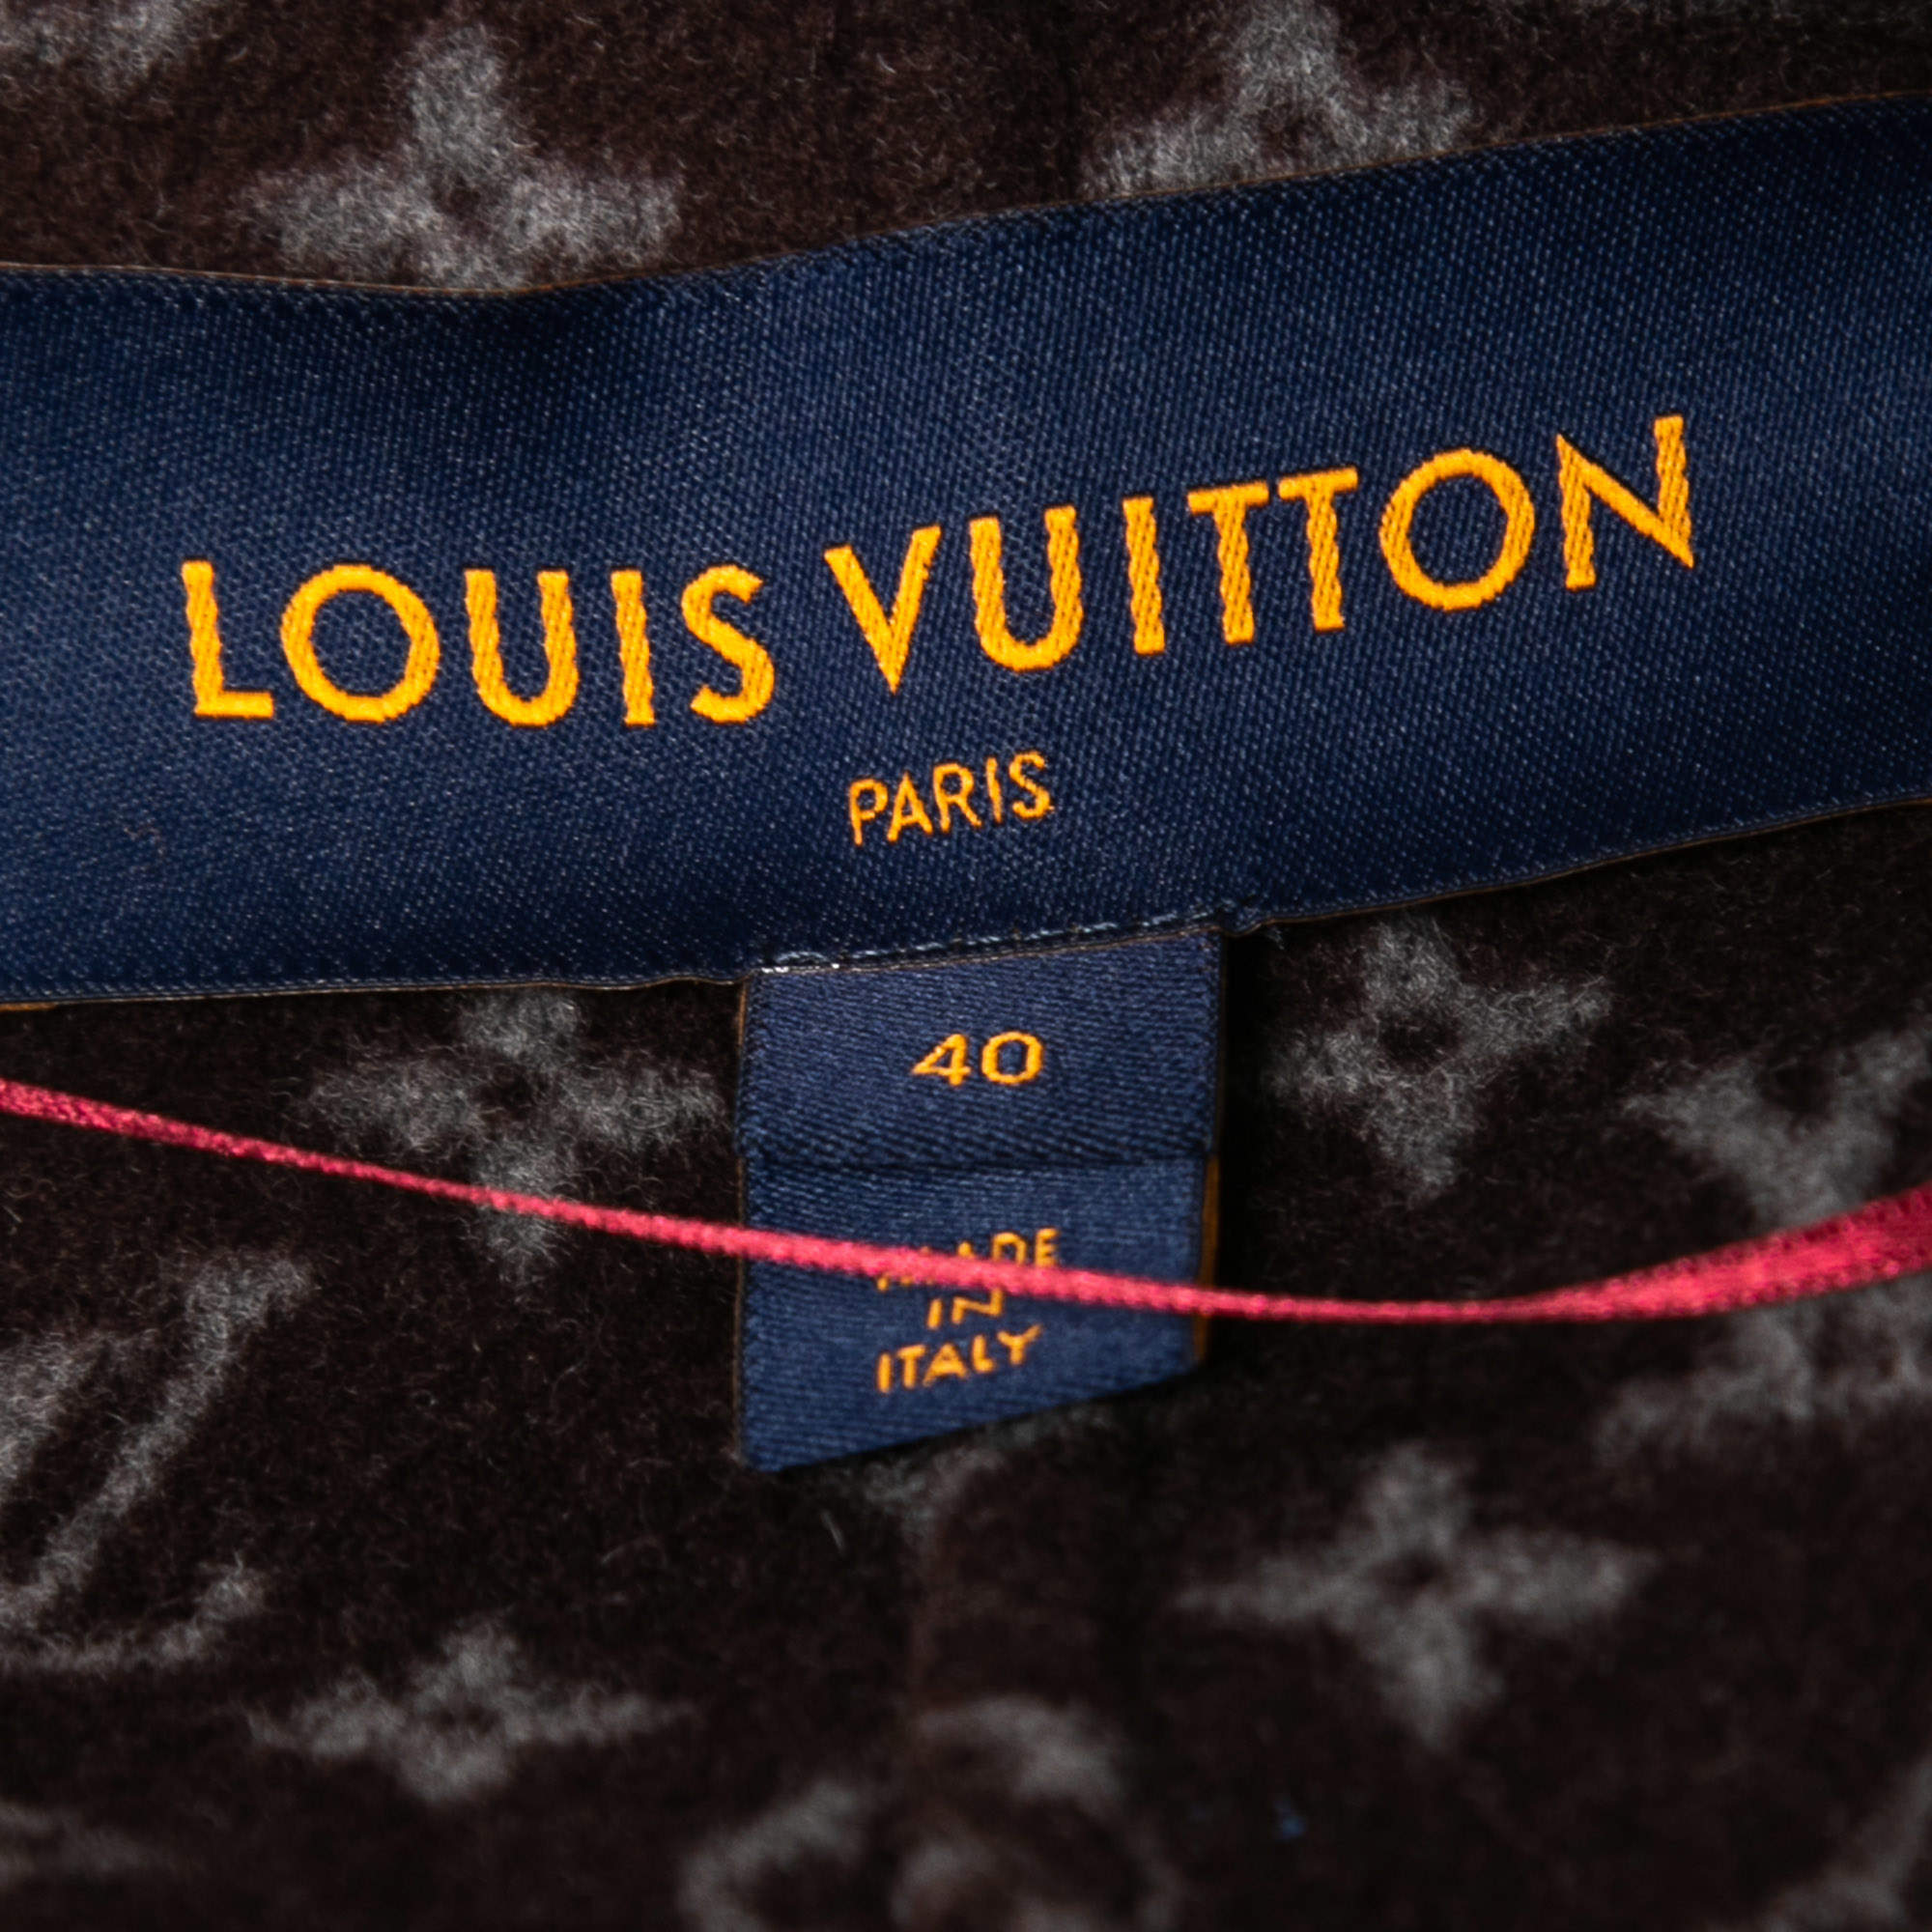 Louis Vuitton Wool Hopsack Belted Coat